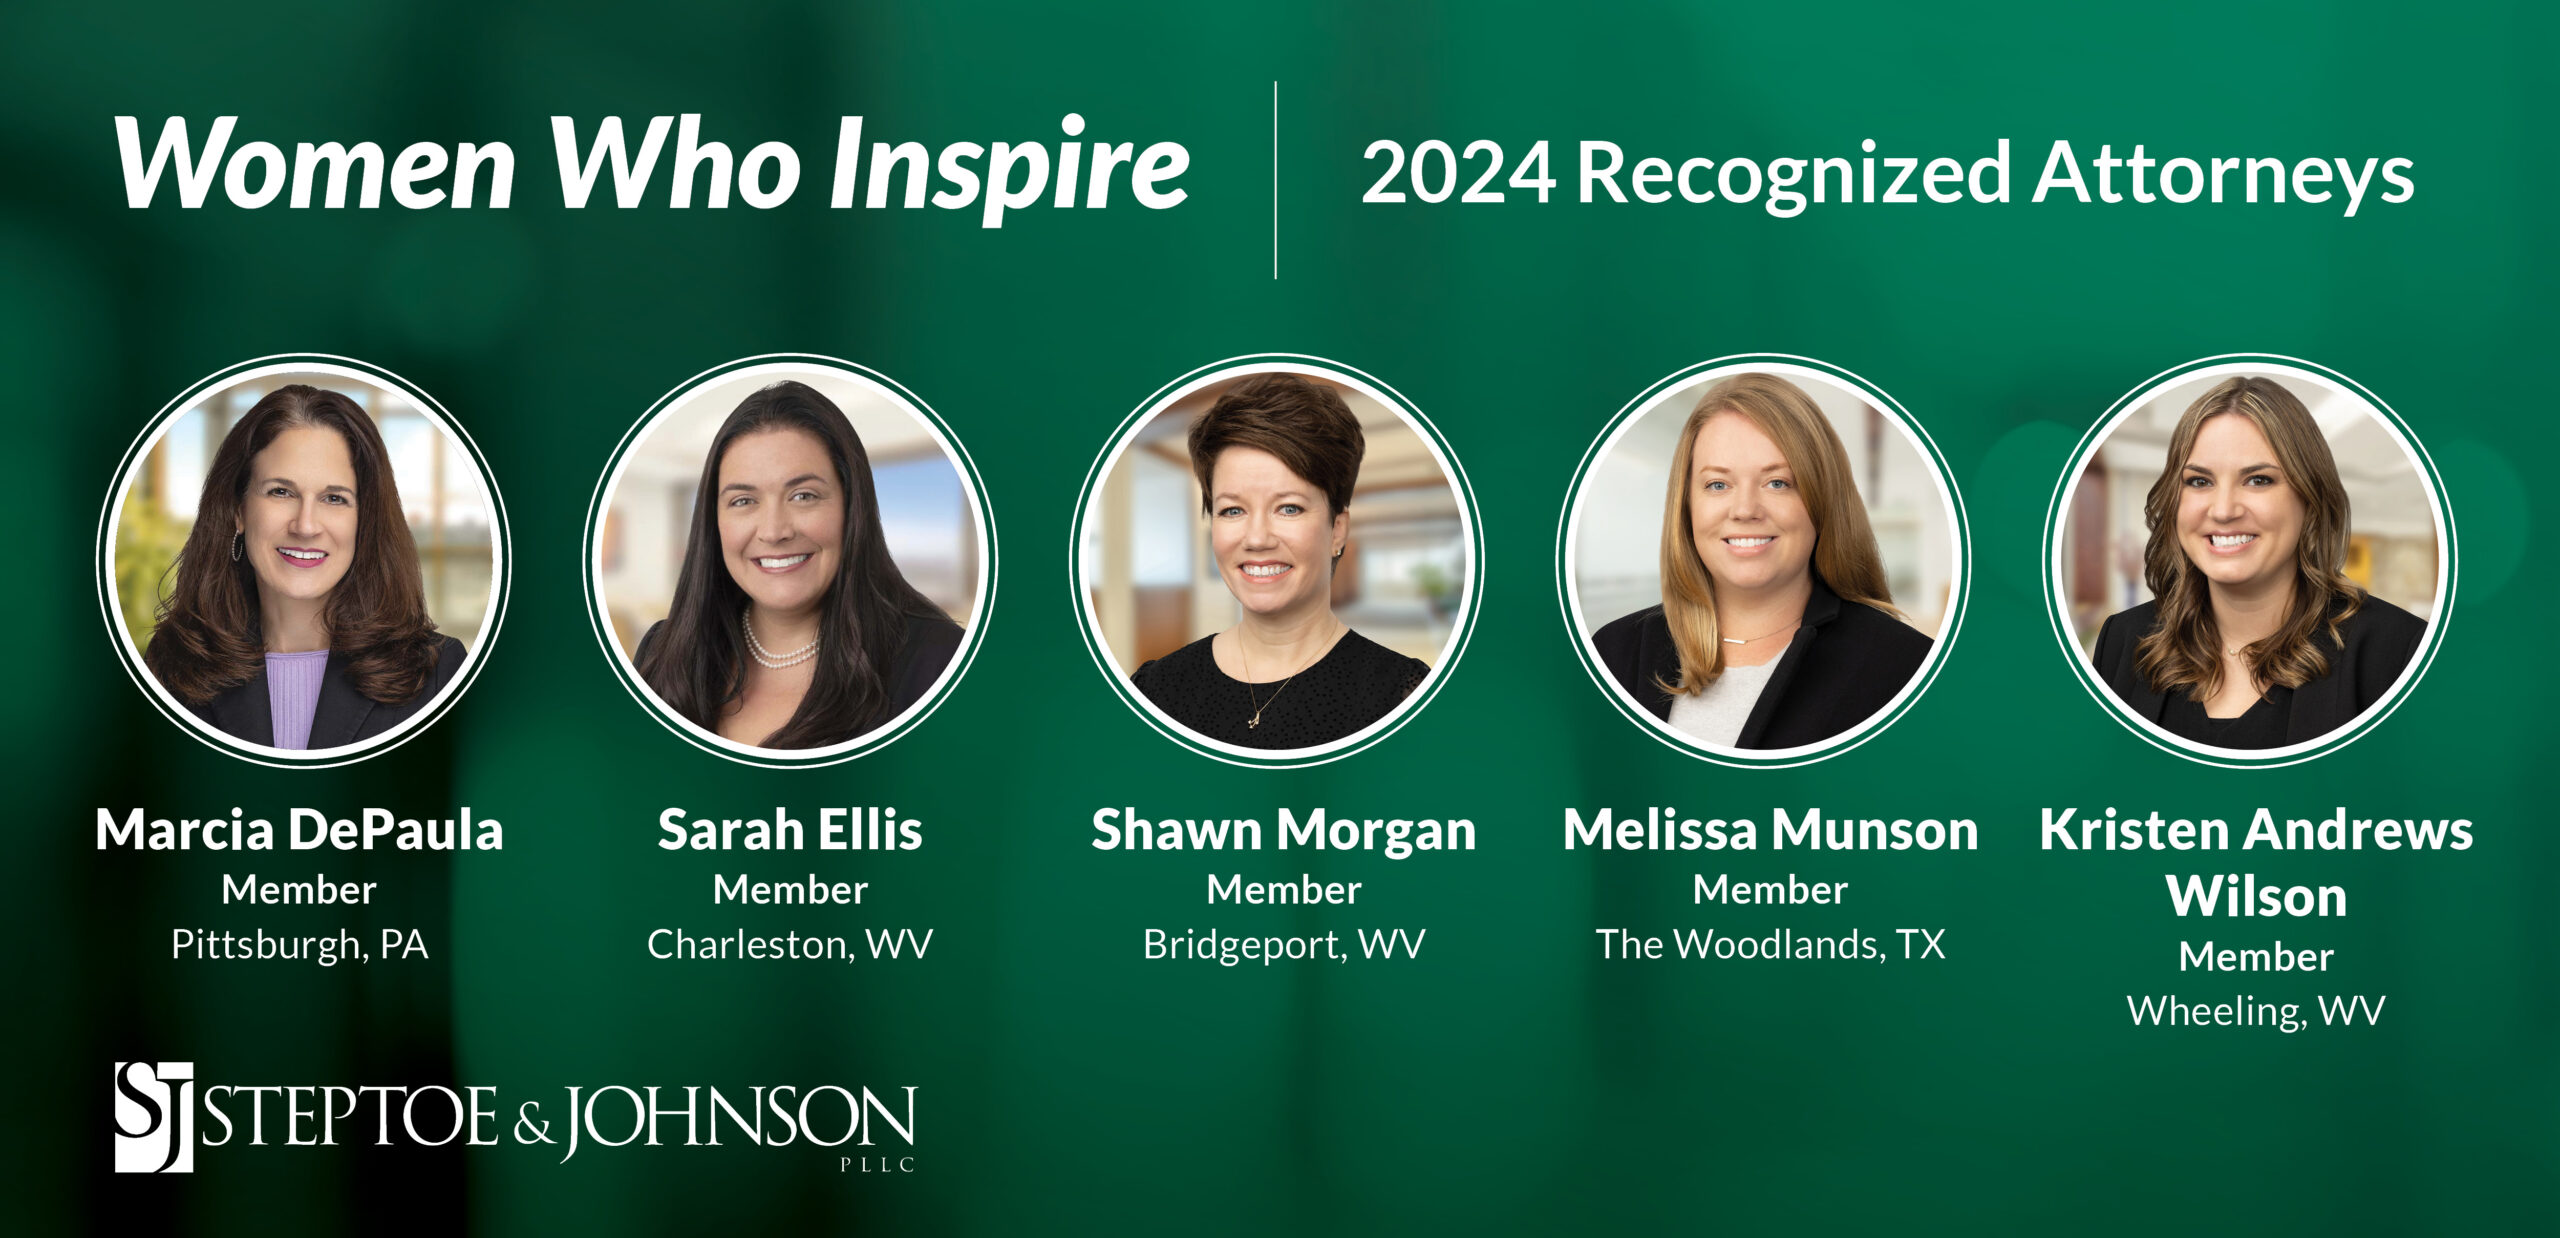 Women Who Inspire 2024 Recognized Attorneys 